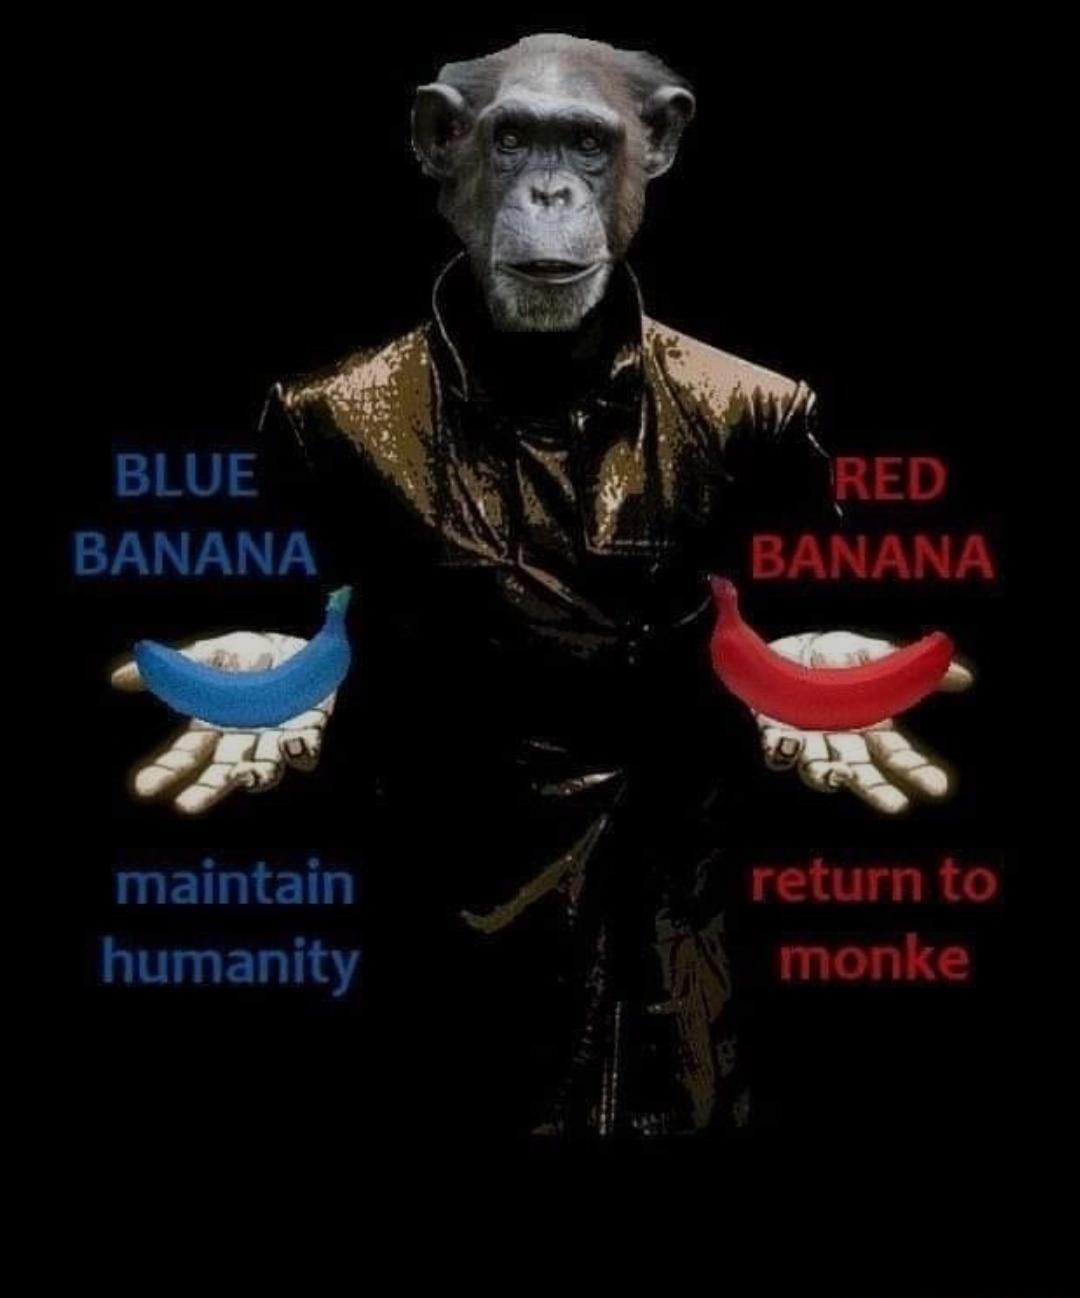 return to monke - Blue Banana Red Banana maintain humanity return to monke